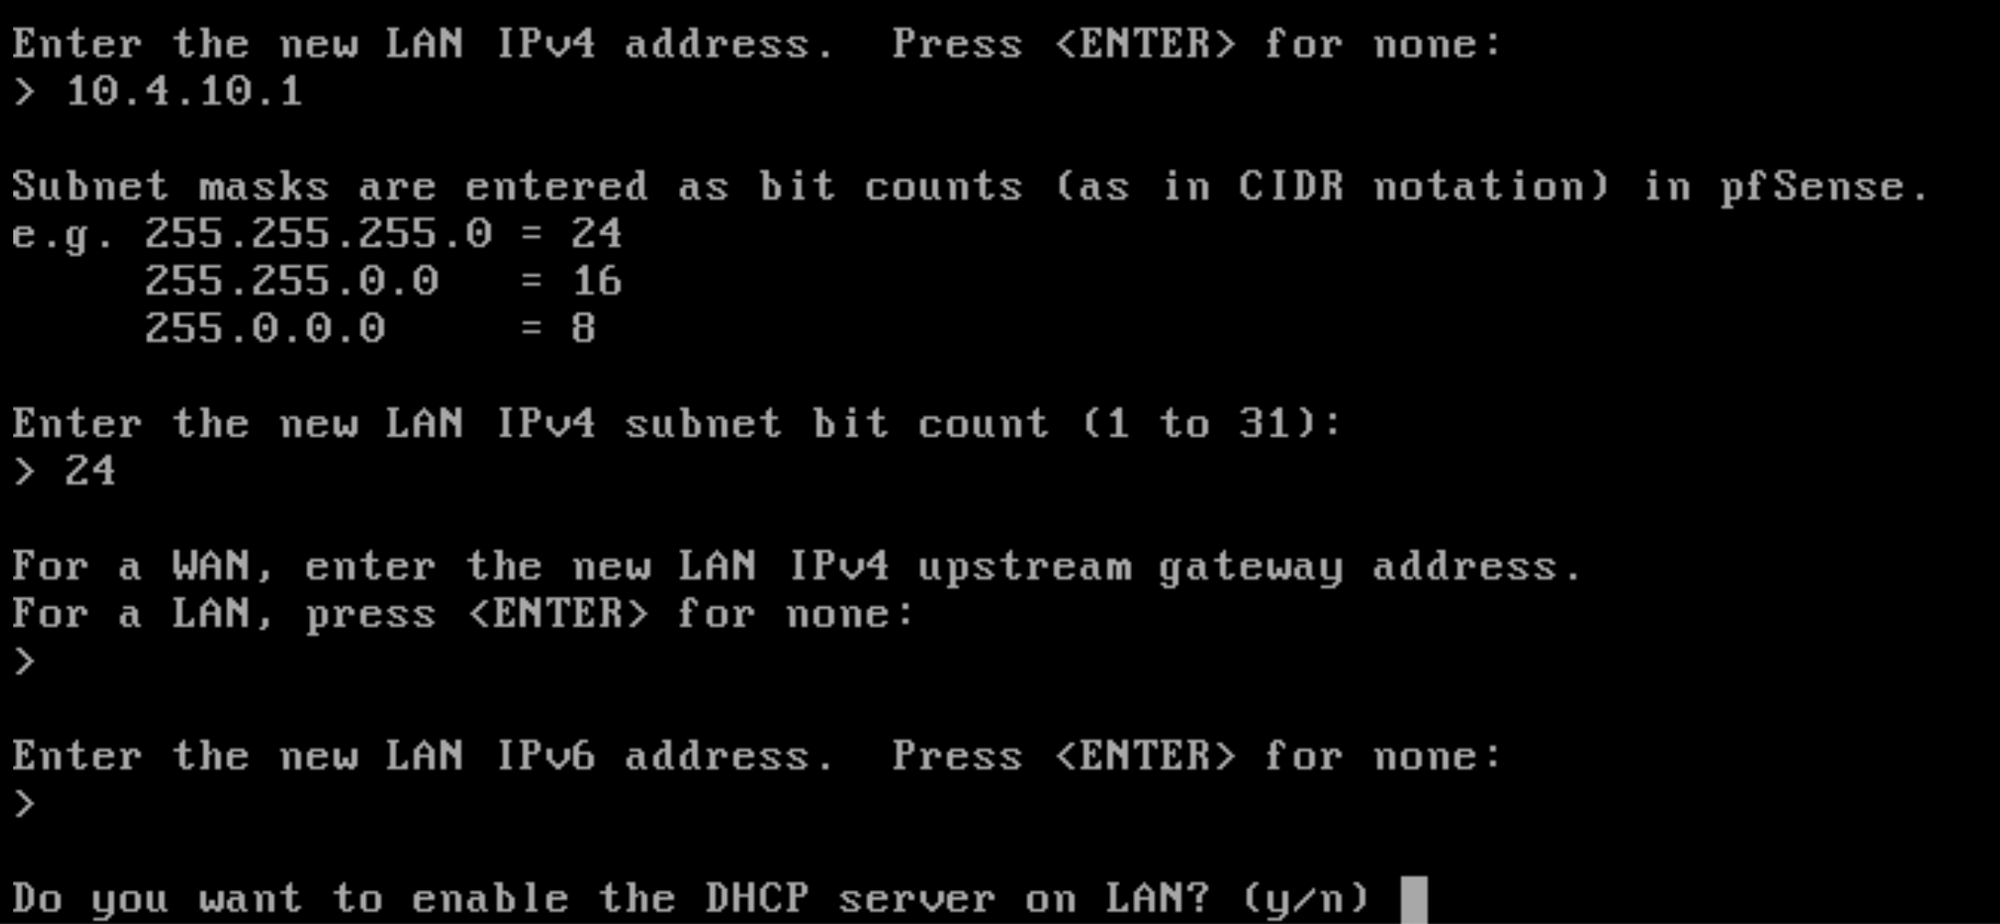 QNAP jako zaawansowany router - pfSense na QNAP - krok po kroku